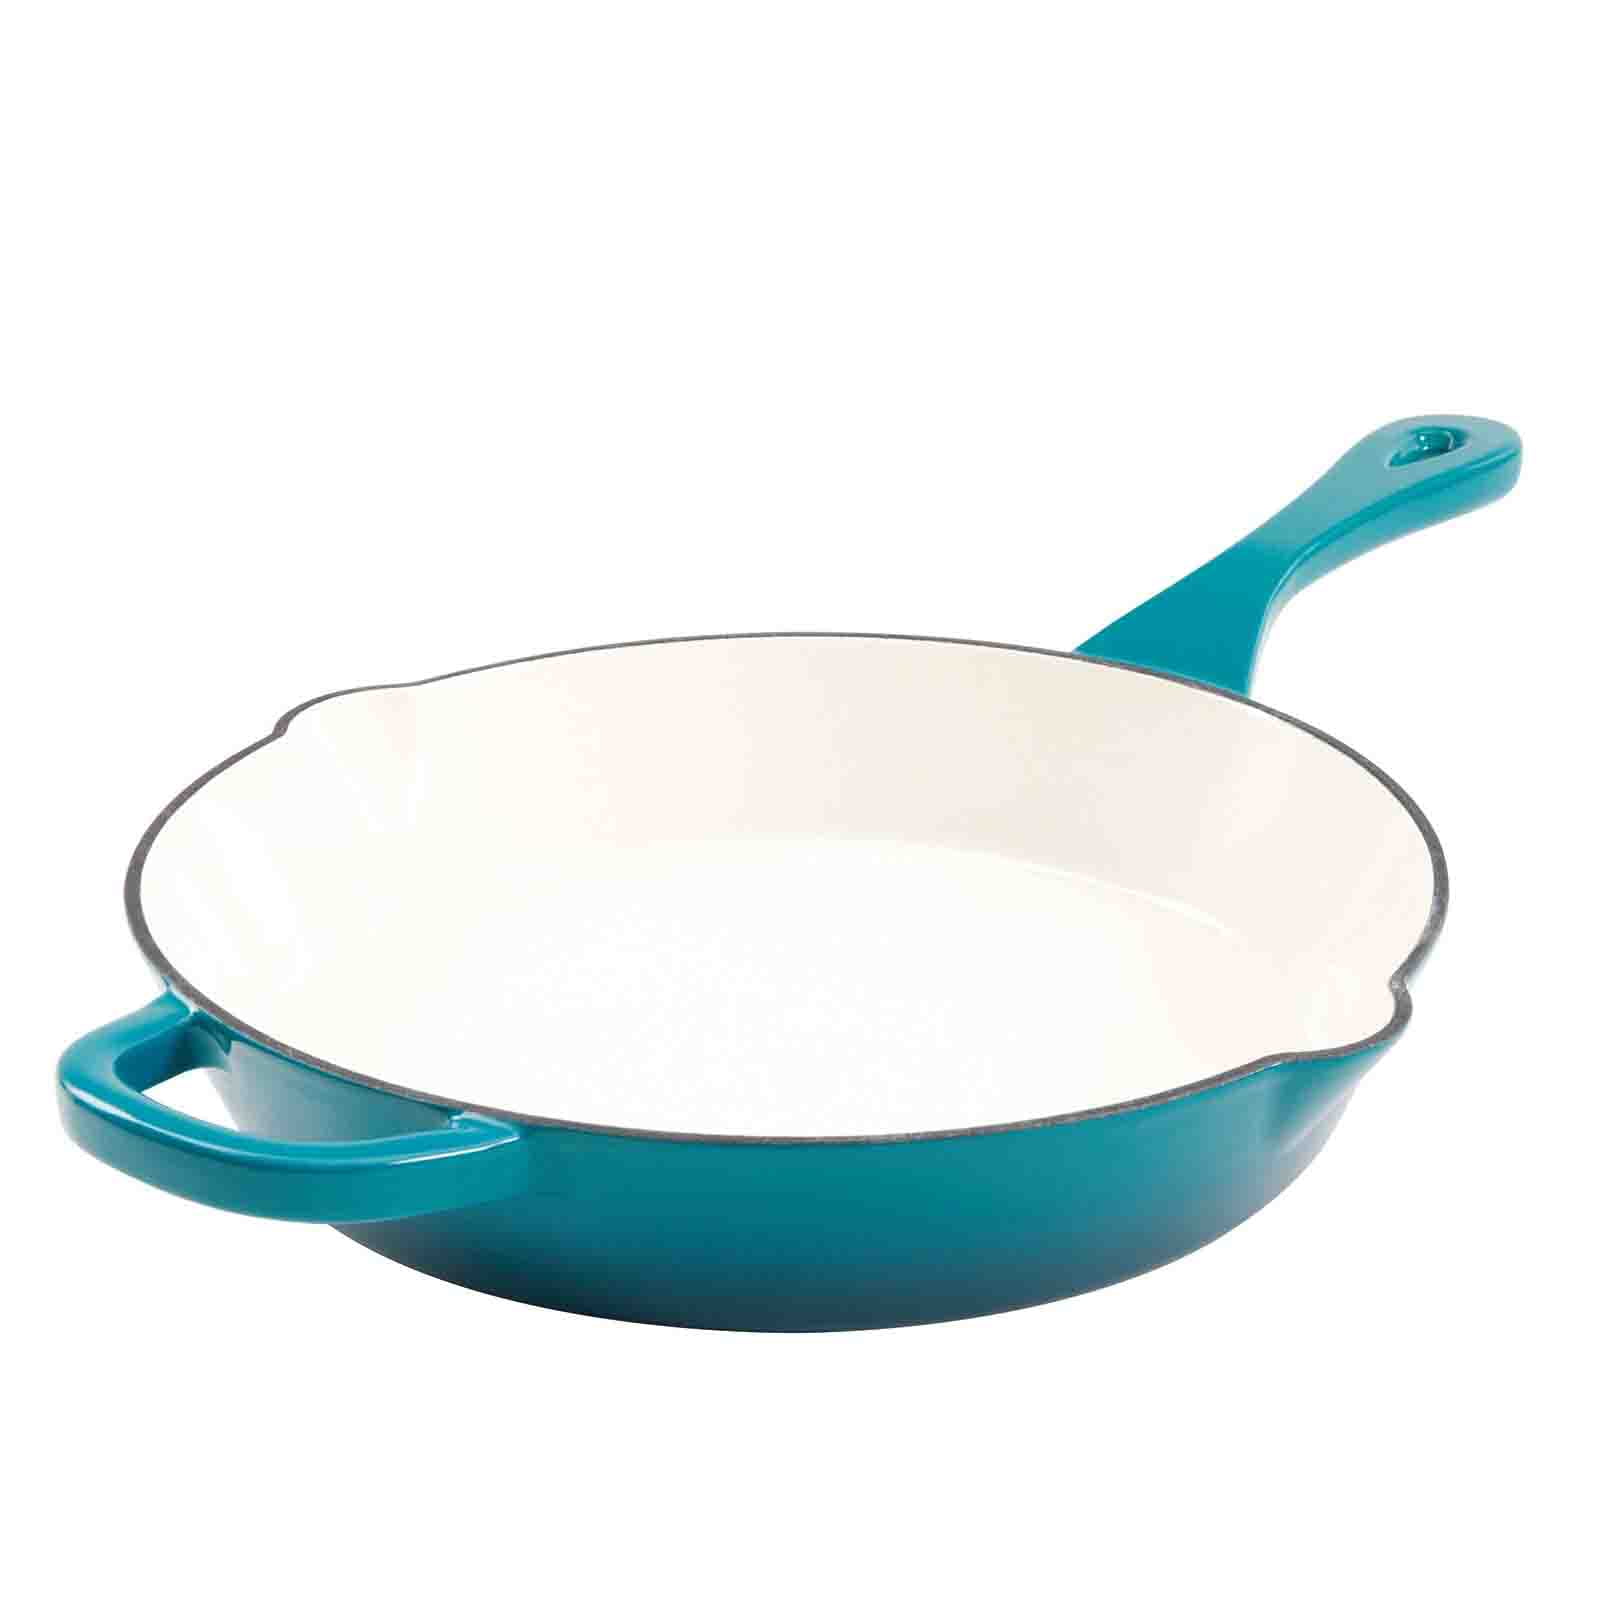 Deep Dish Ceramic Skillet - 38528